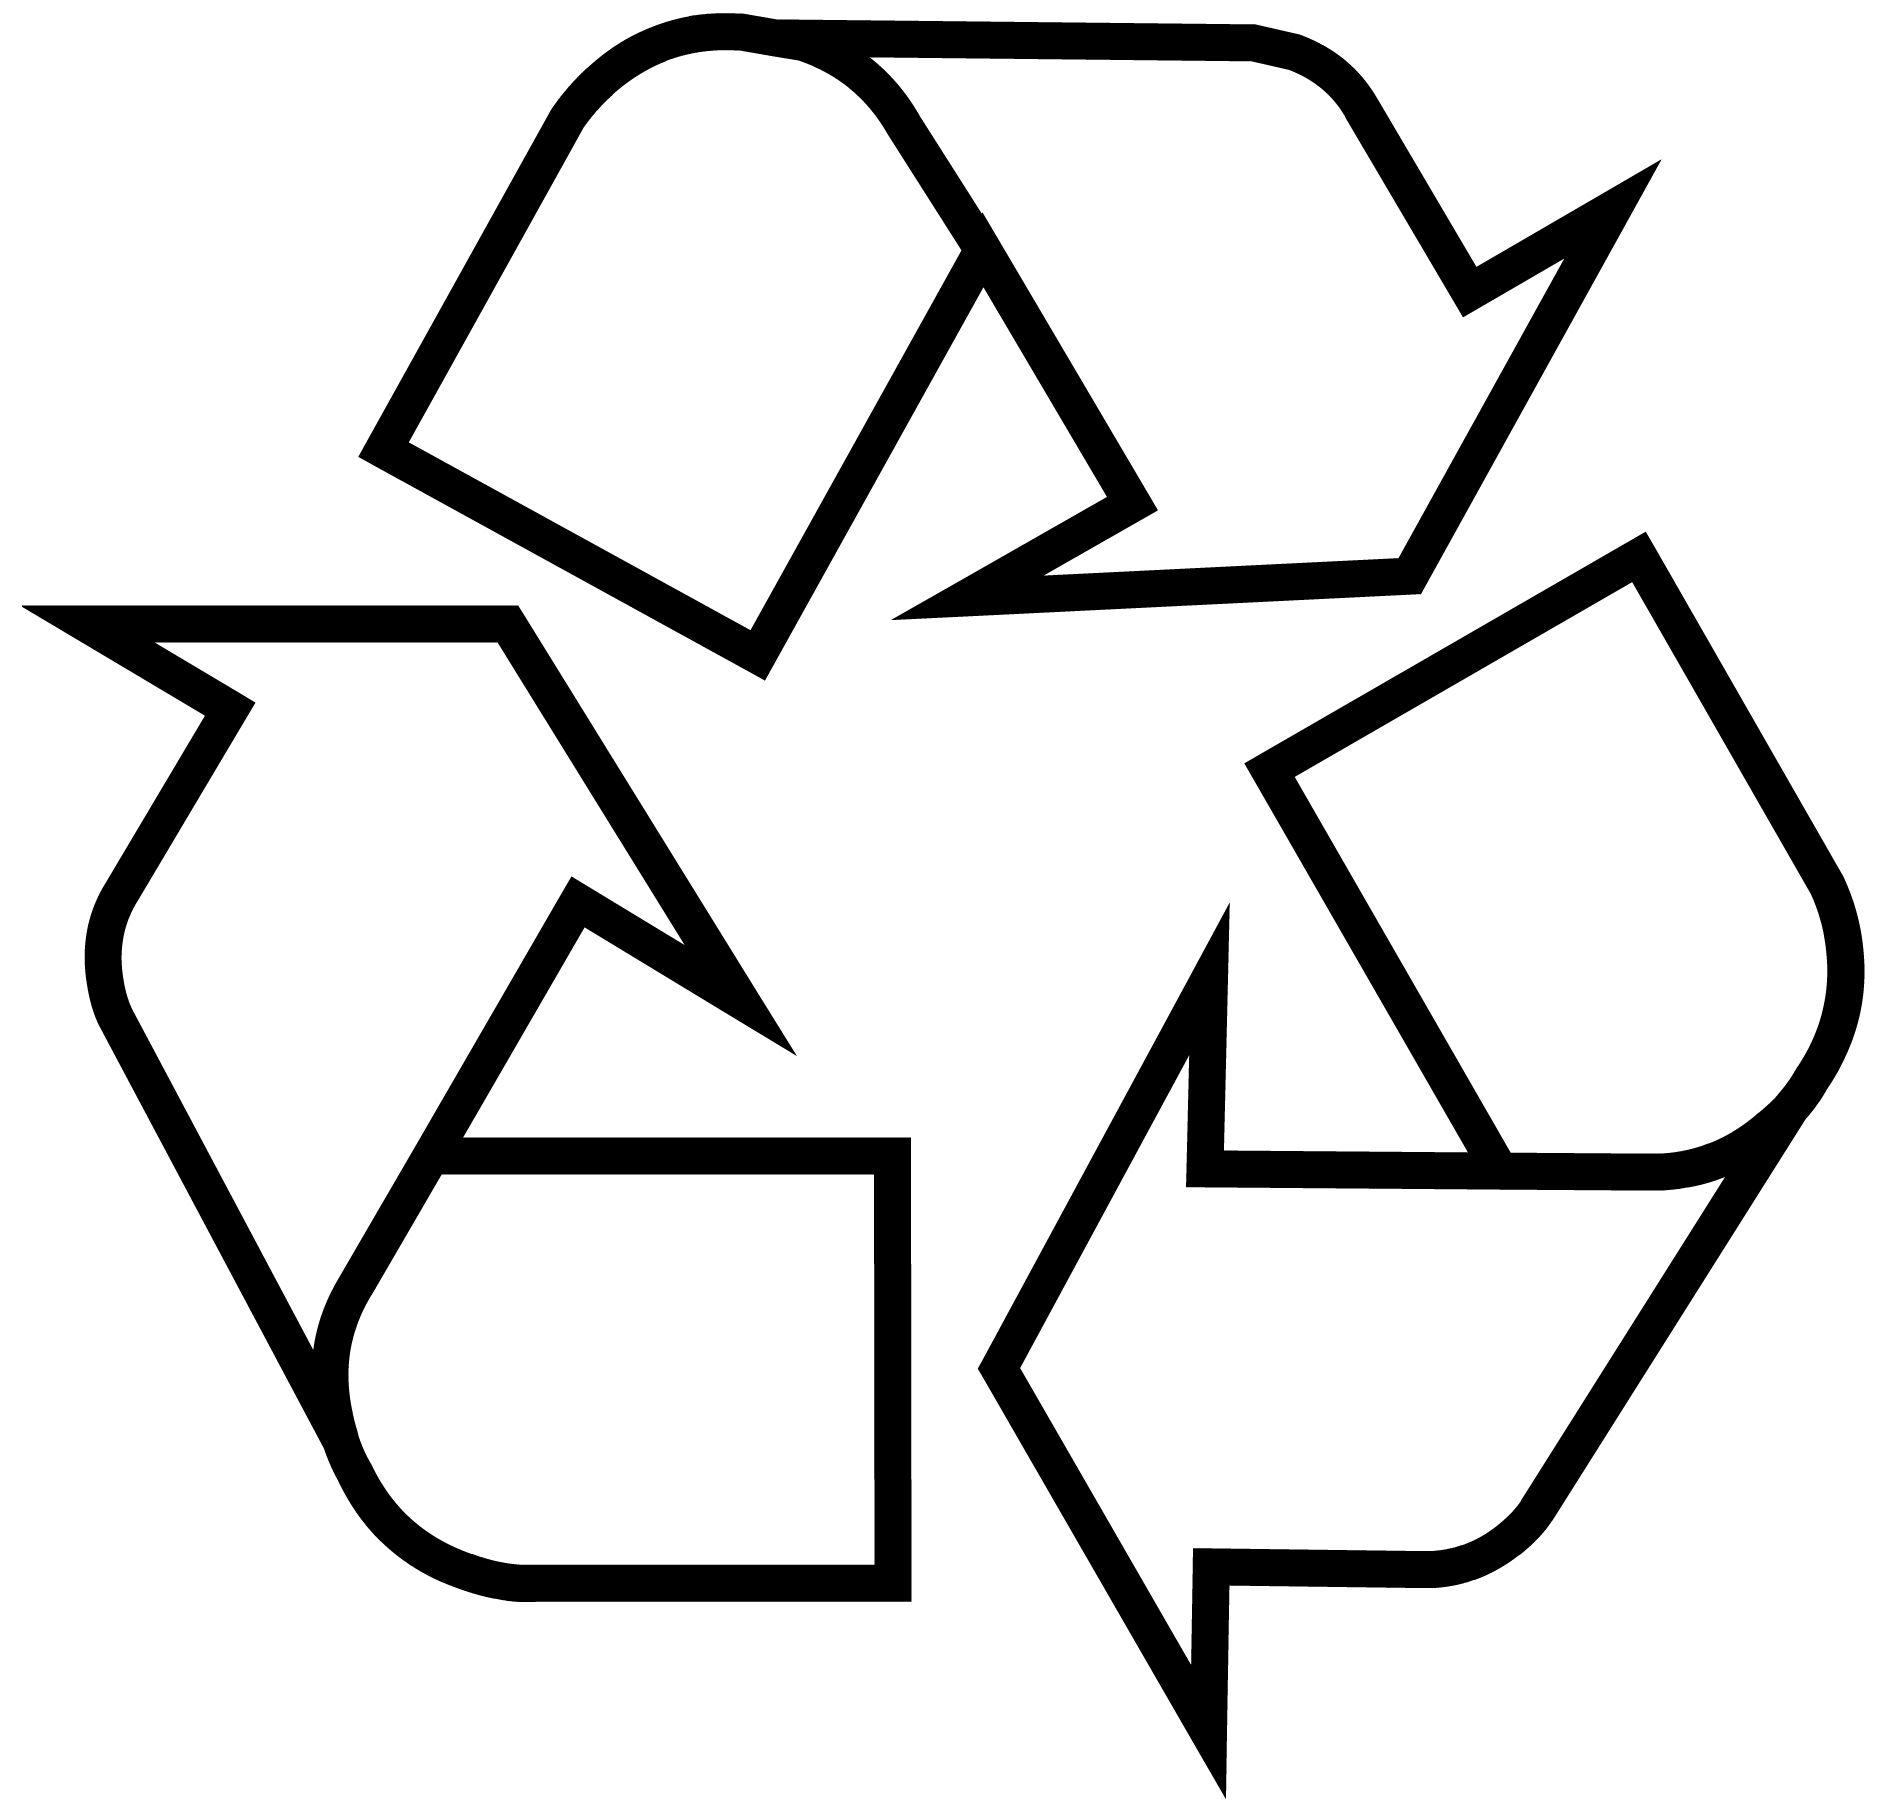 All-Black Y Logo - Recycling Symbol - Download the Original Recycle Logo